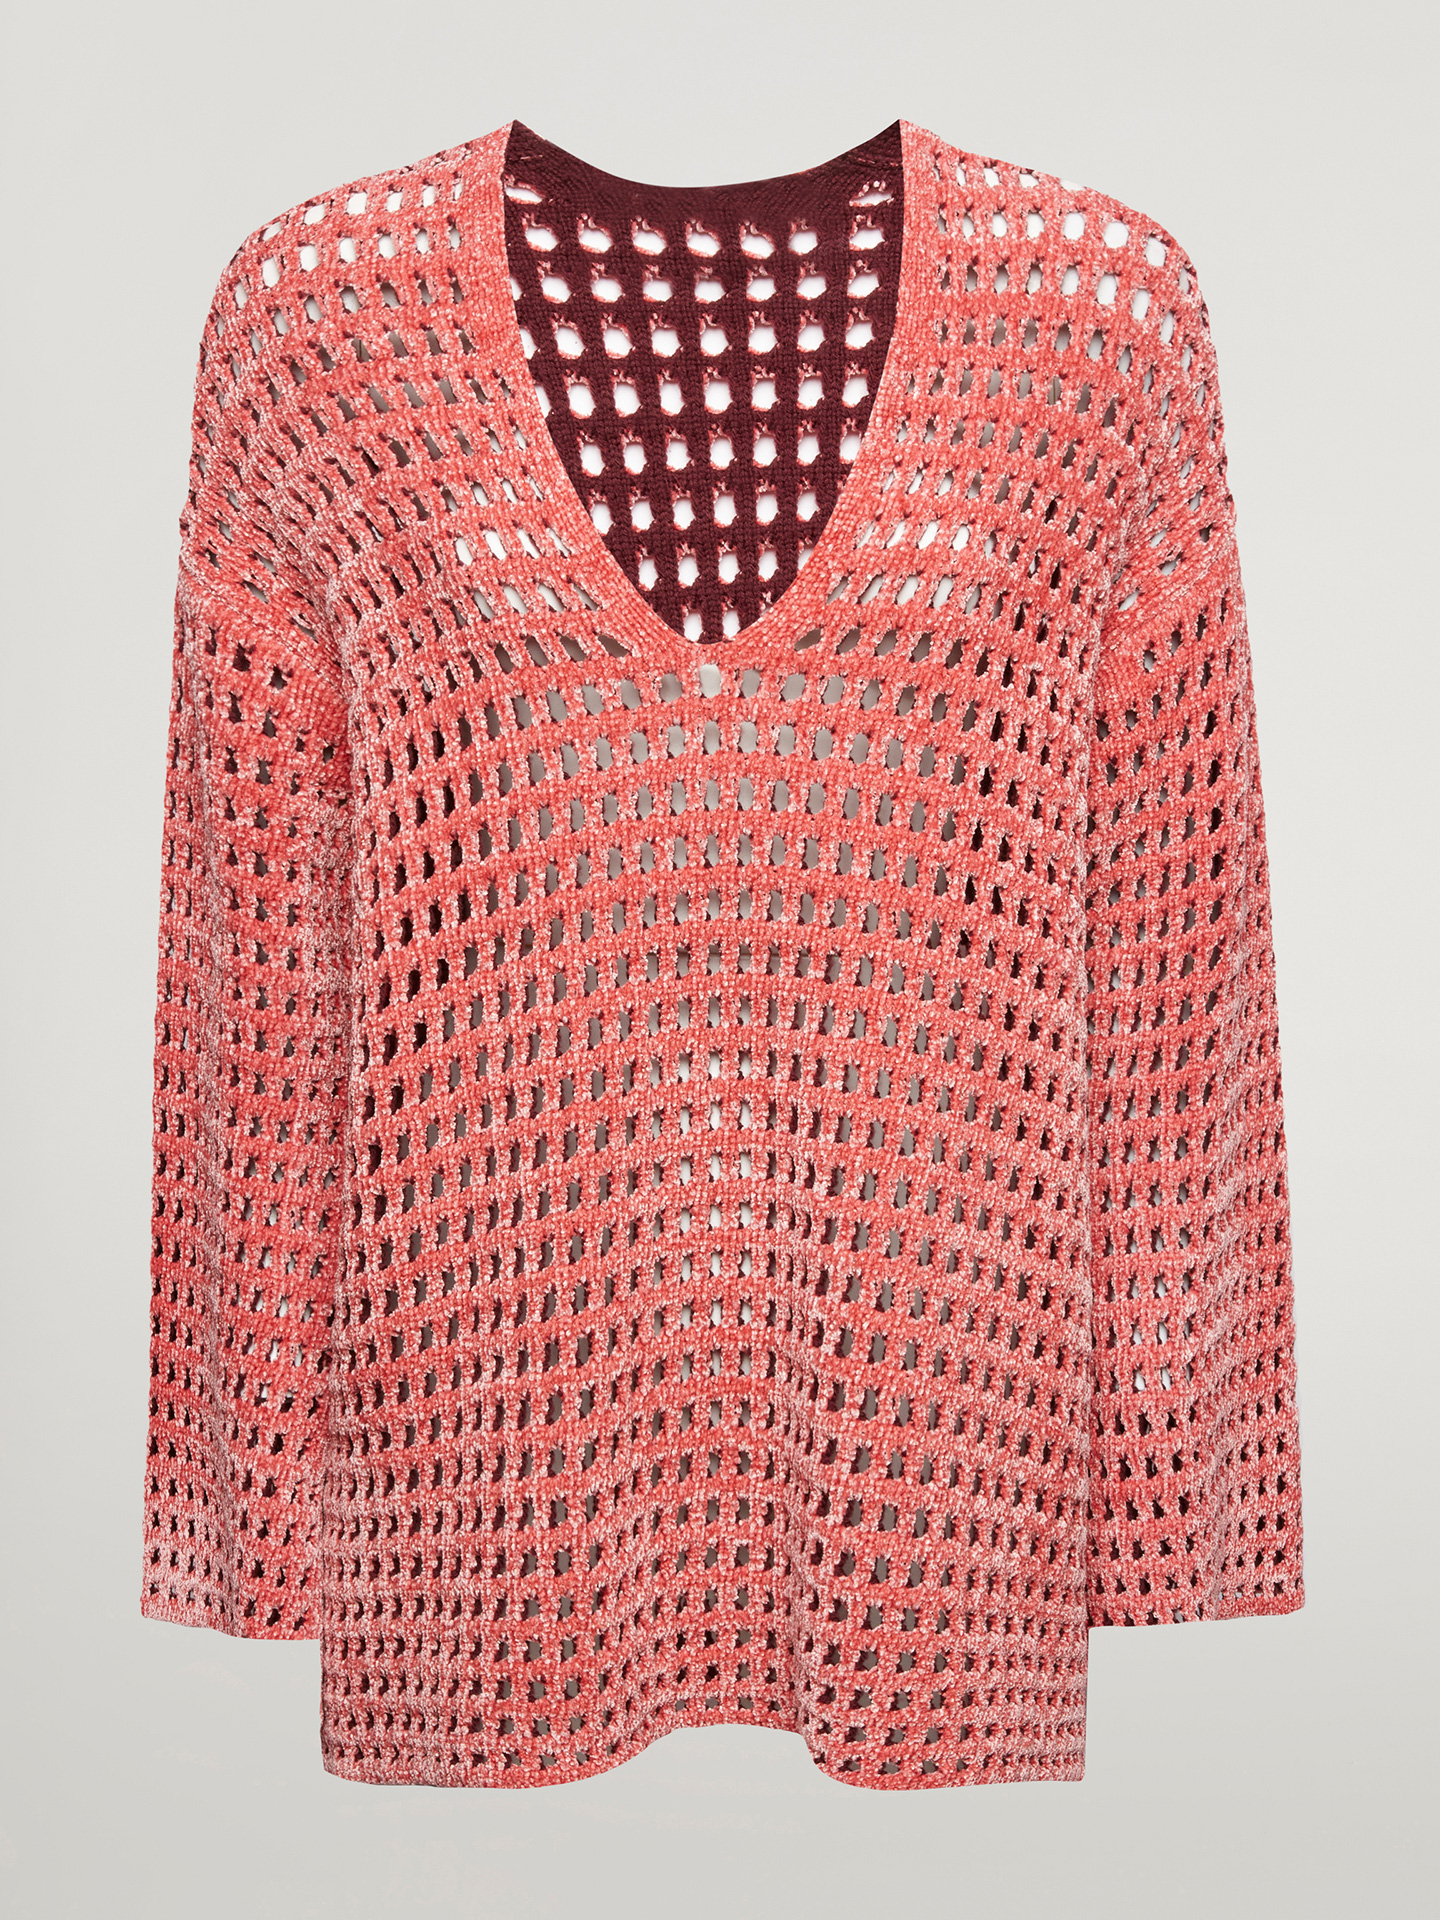 Wolford - Knit Net Top Long Sleeves, Frau, brandied apricot, Größe: XS günstig online kaufen